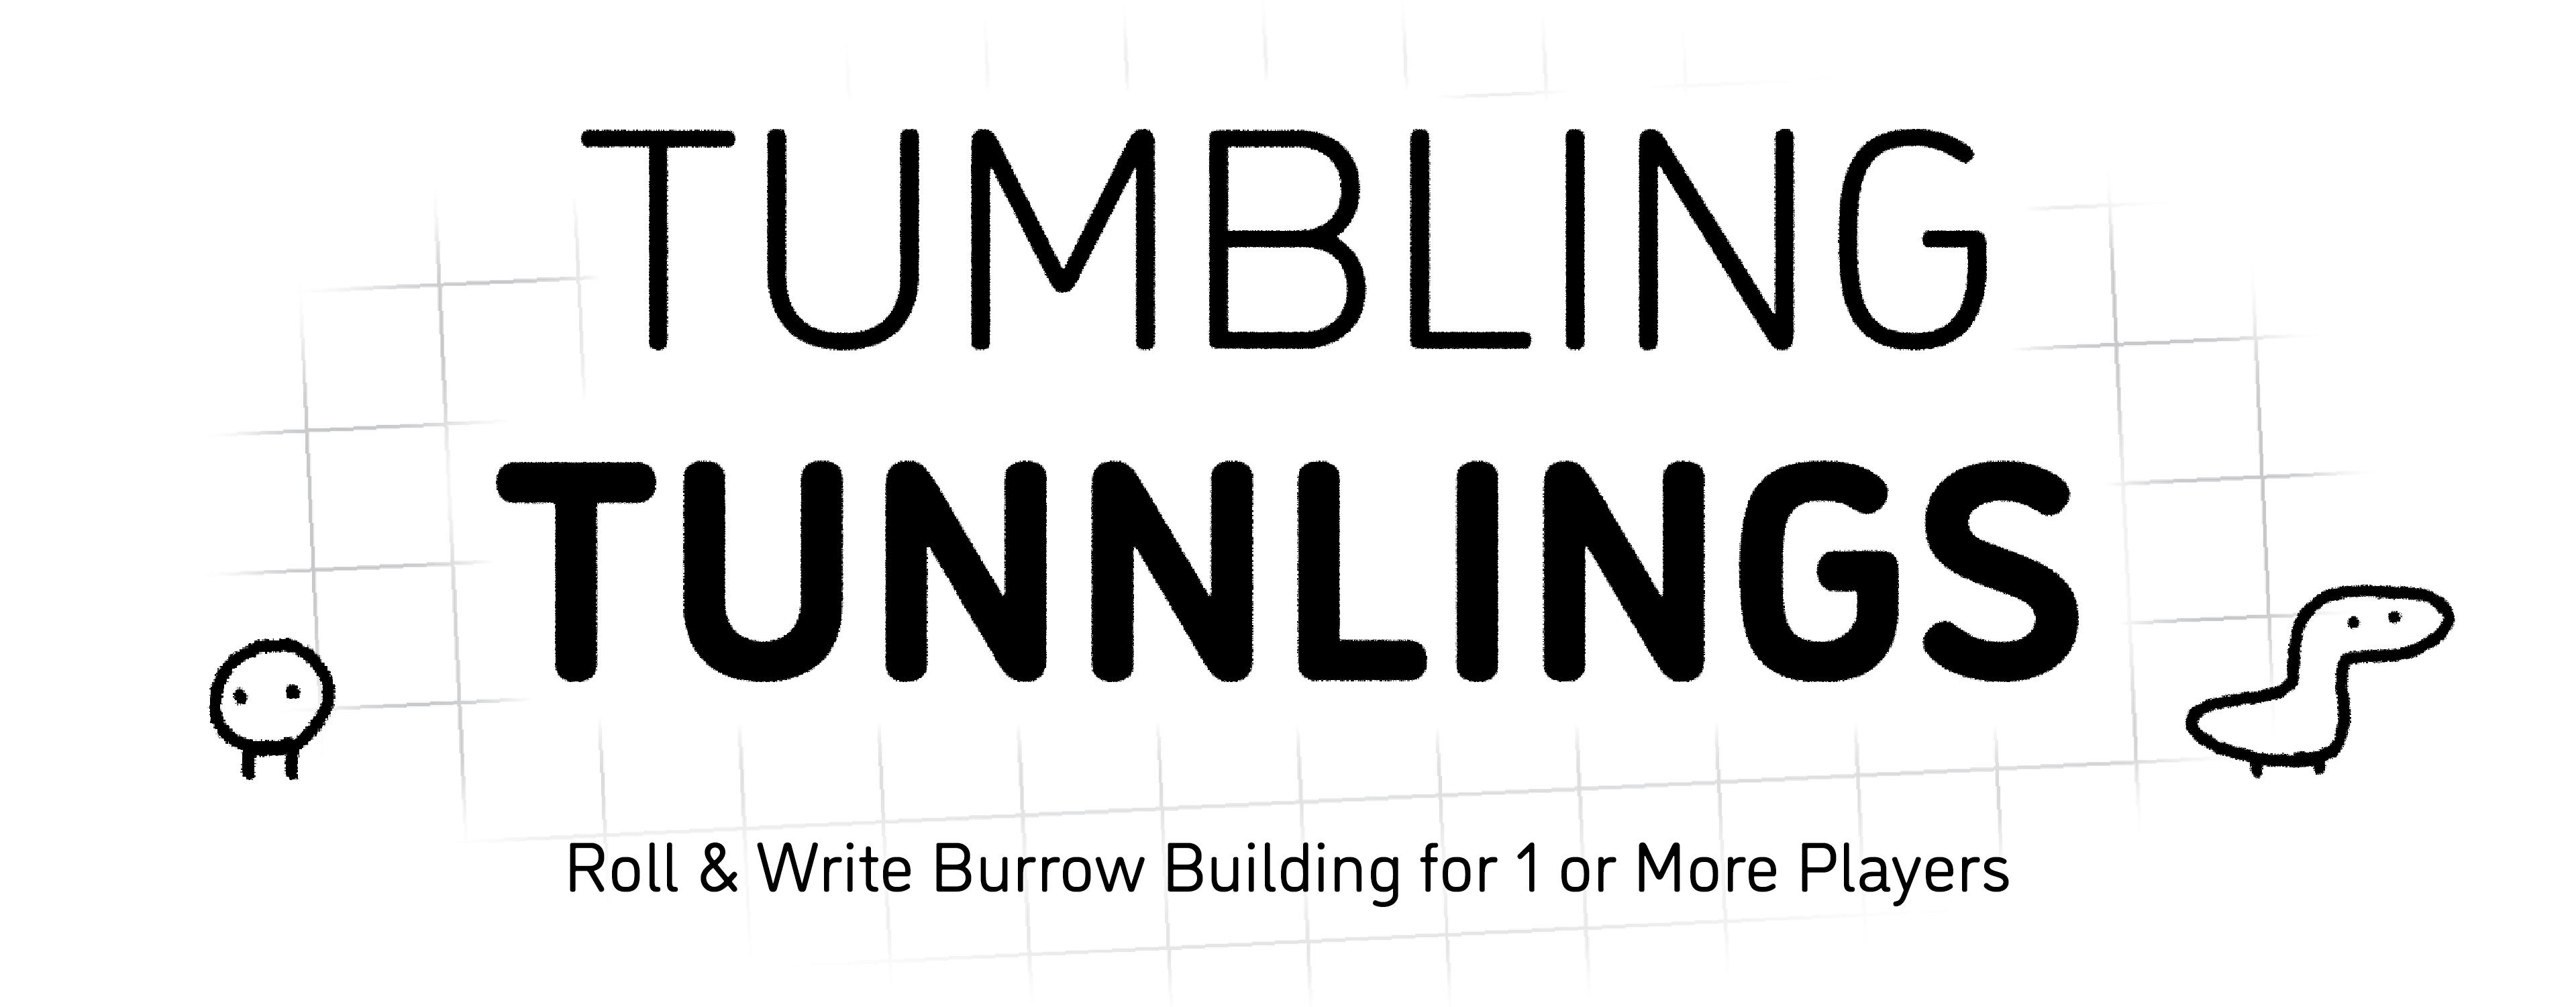 Tumbling Tunnlings [Jam Version]